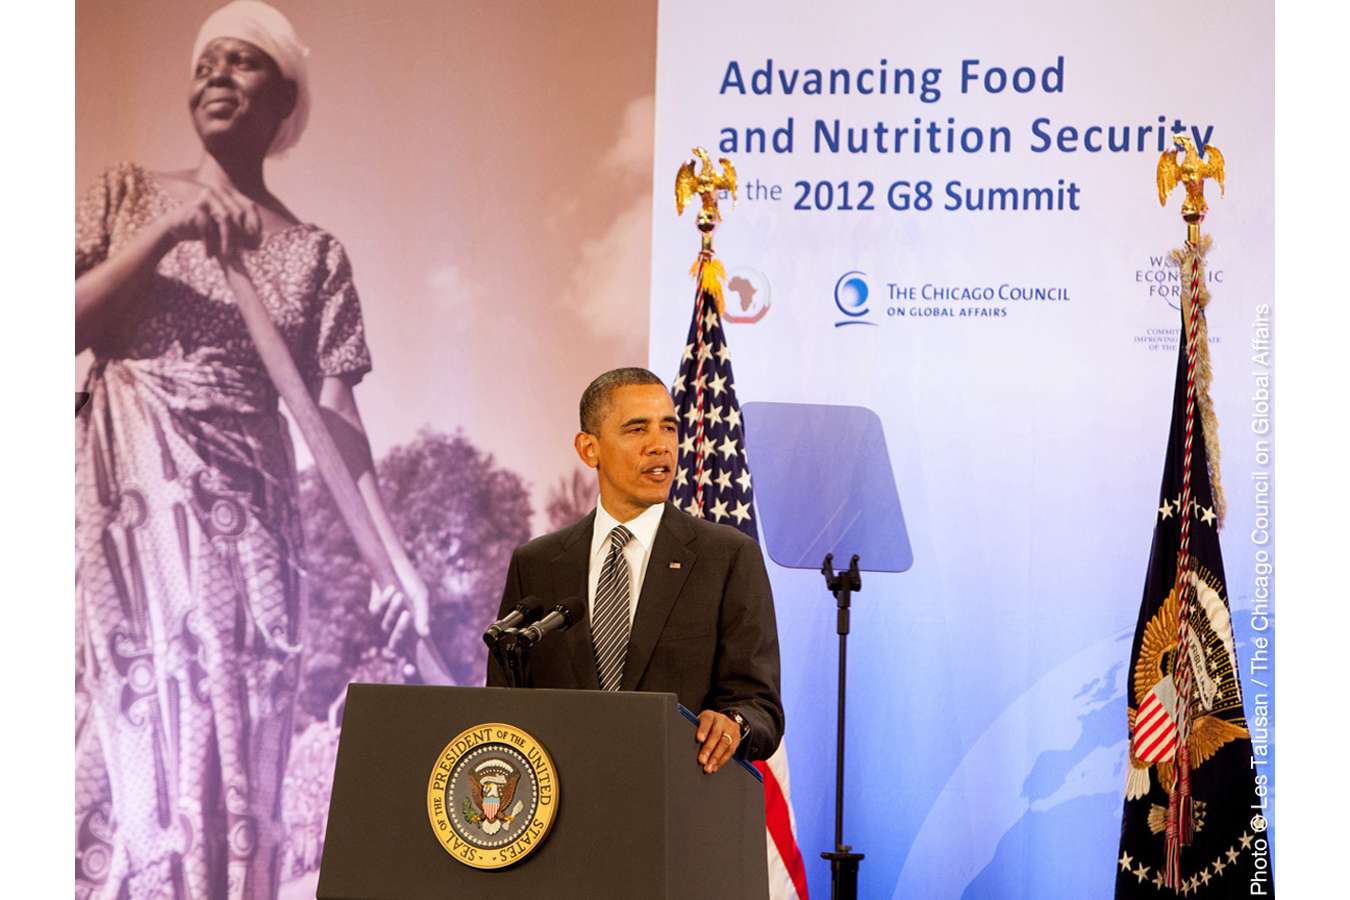 ccg8_1_prev_LesTalusan : President Obama Gives Keynote at Chicago Council Symposium, Washington DC 2012